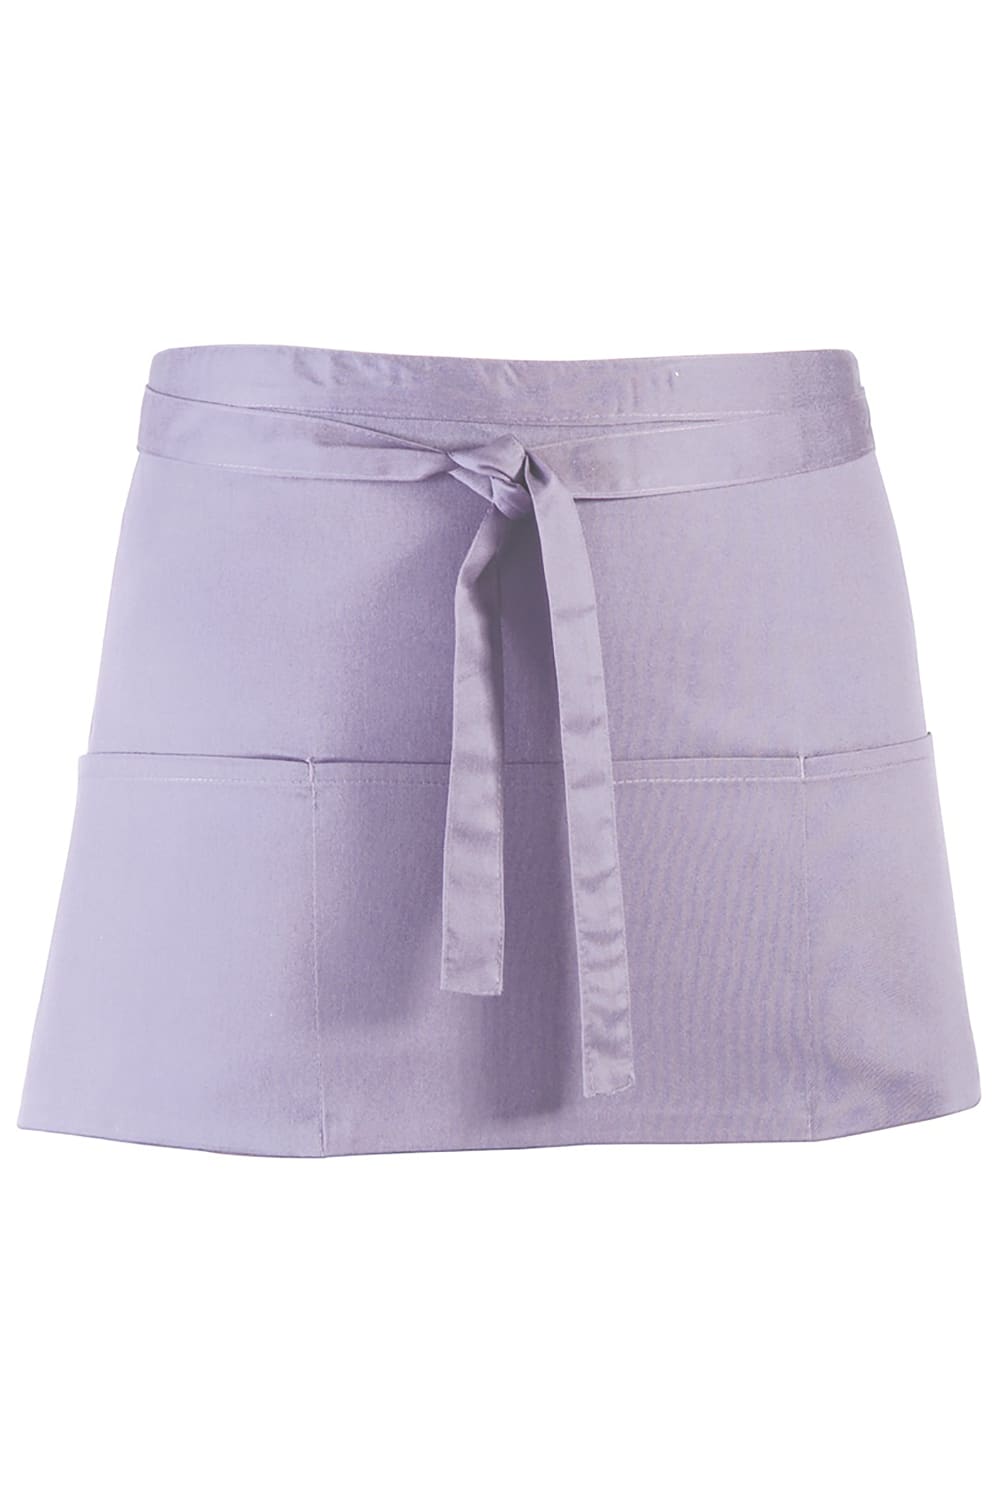 Premier Ladies/Womens Colors 3 Pocket Apron / Workwear (Lilac) (One Size)